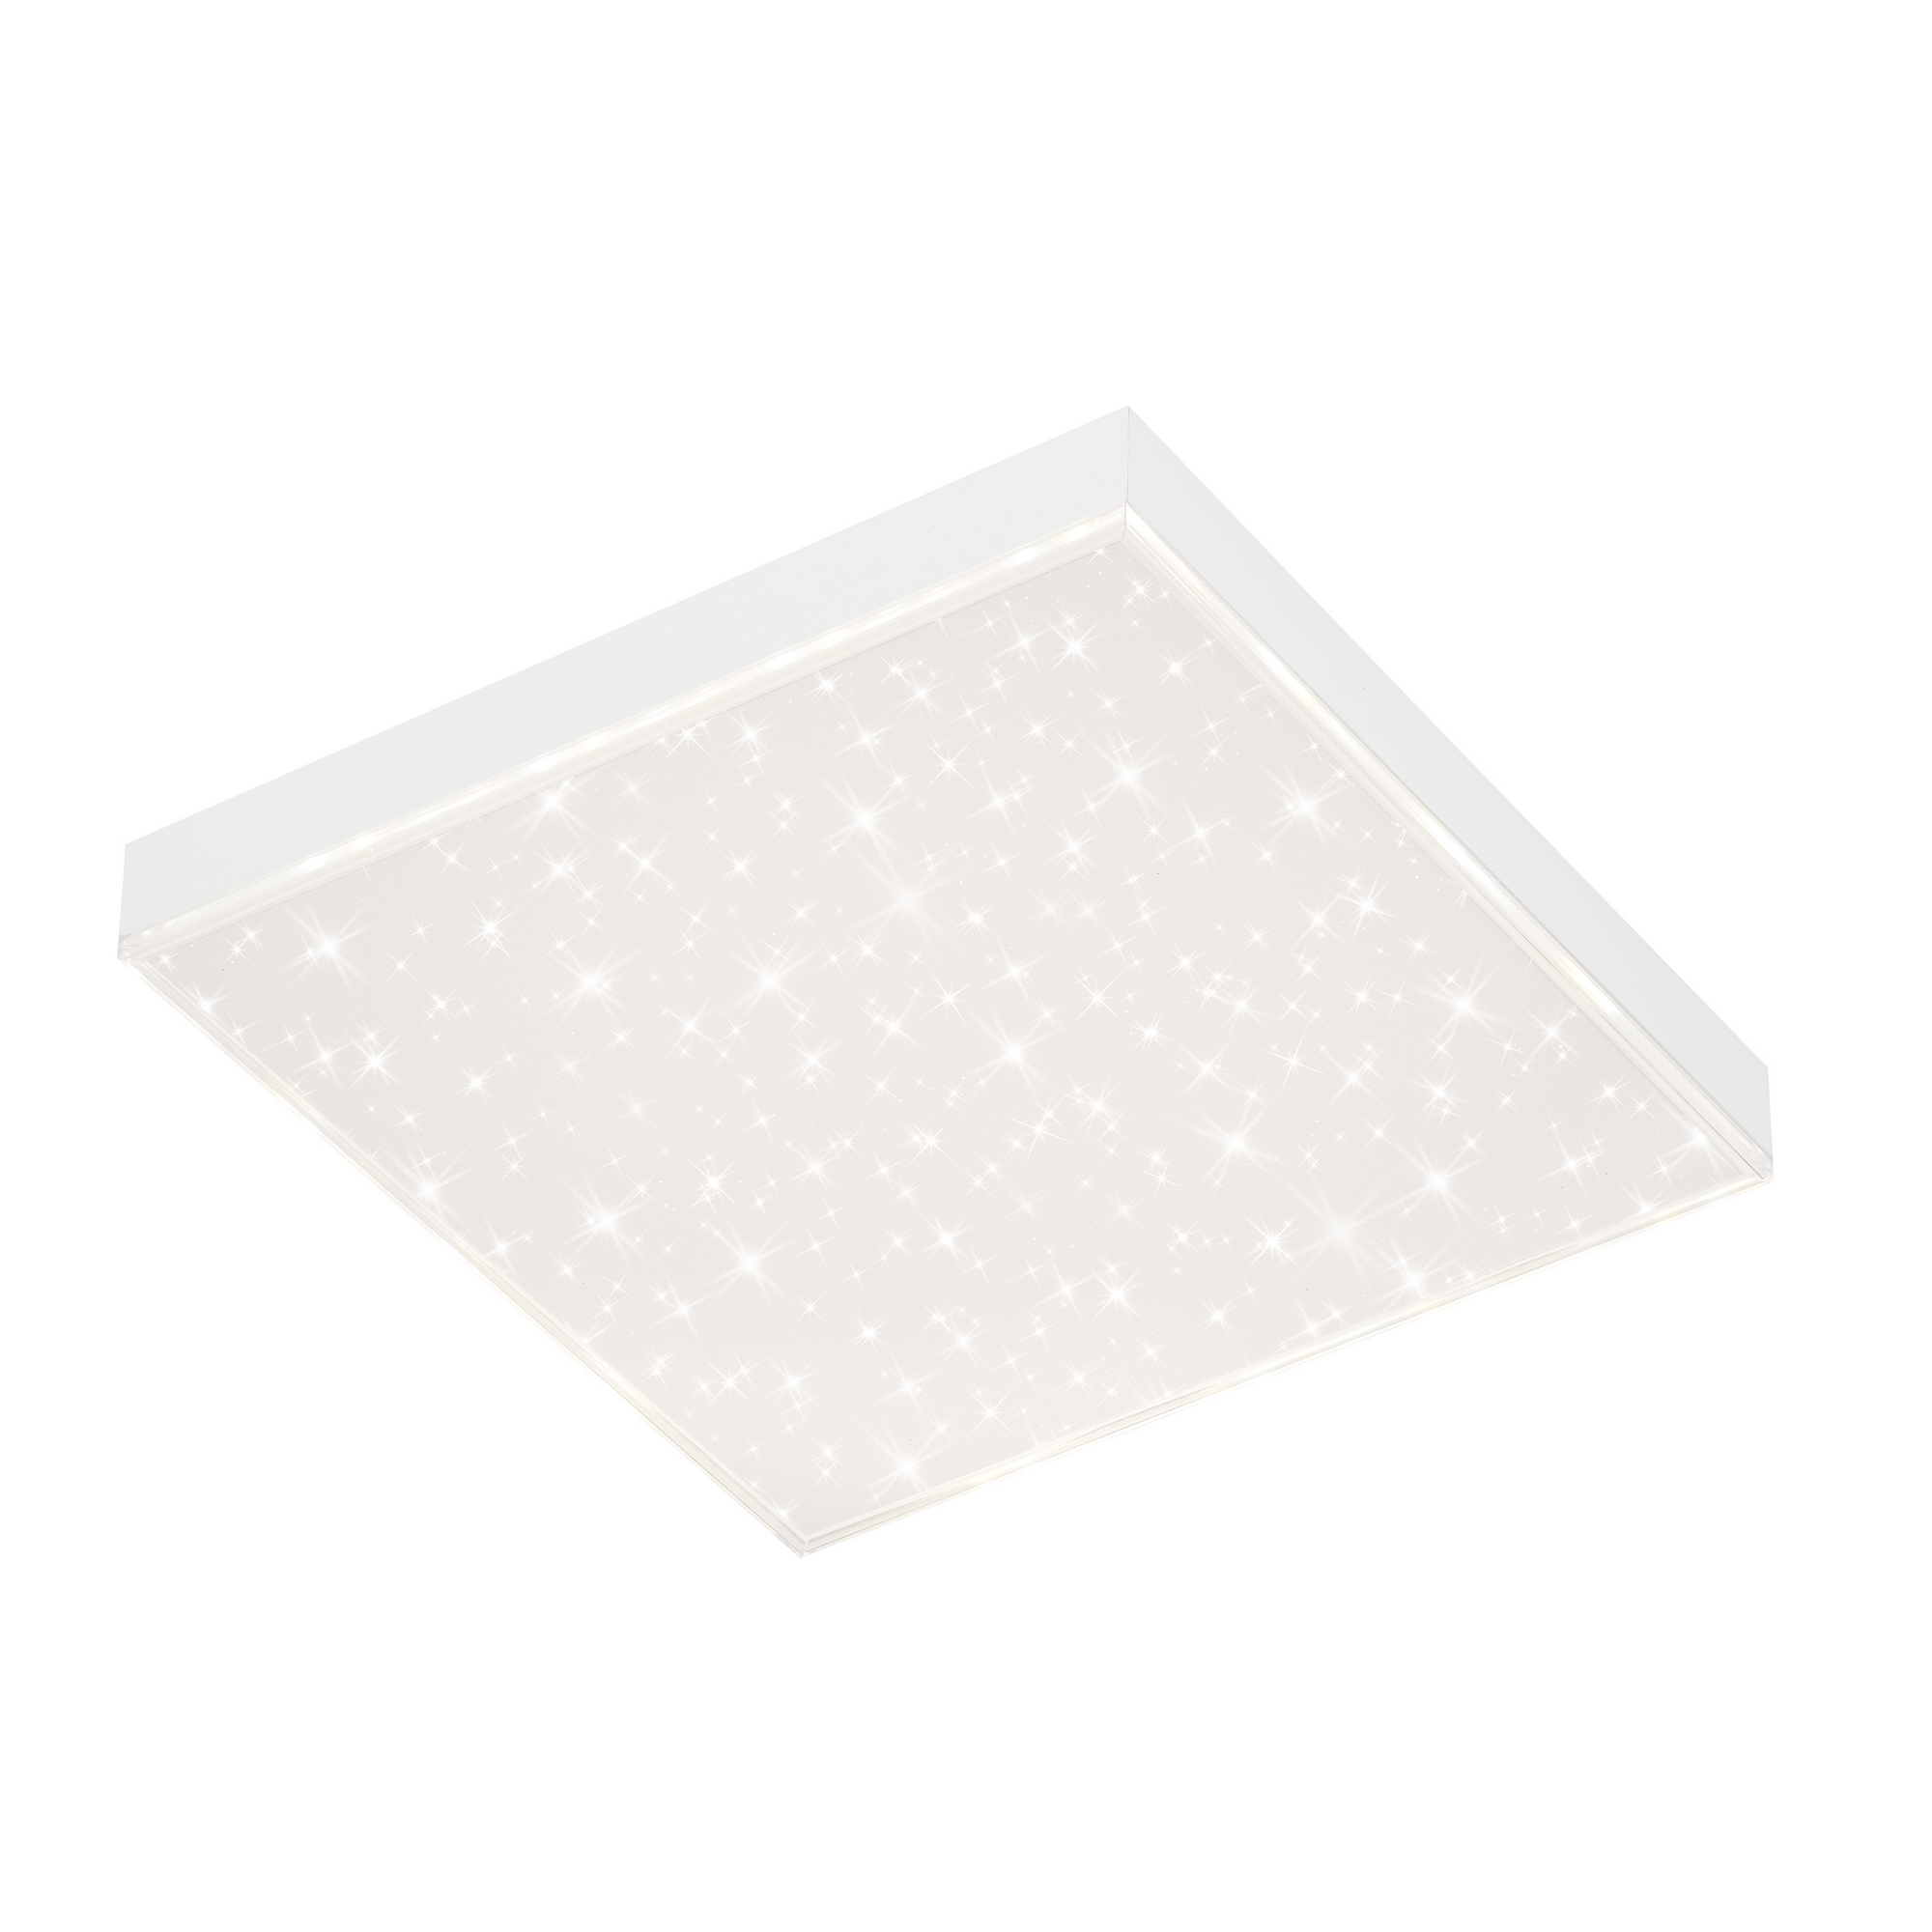 LED-Panelleuchte 'Frameless' mit Sterneneffekt 1600 lm weiß 29,5 x 29,5 cm + product picture